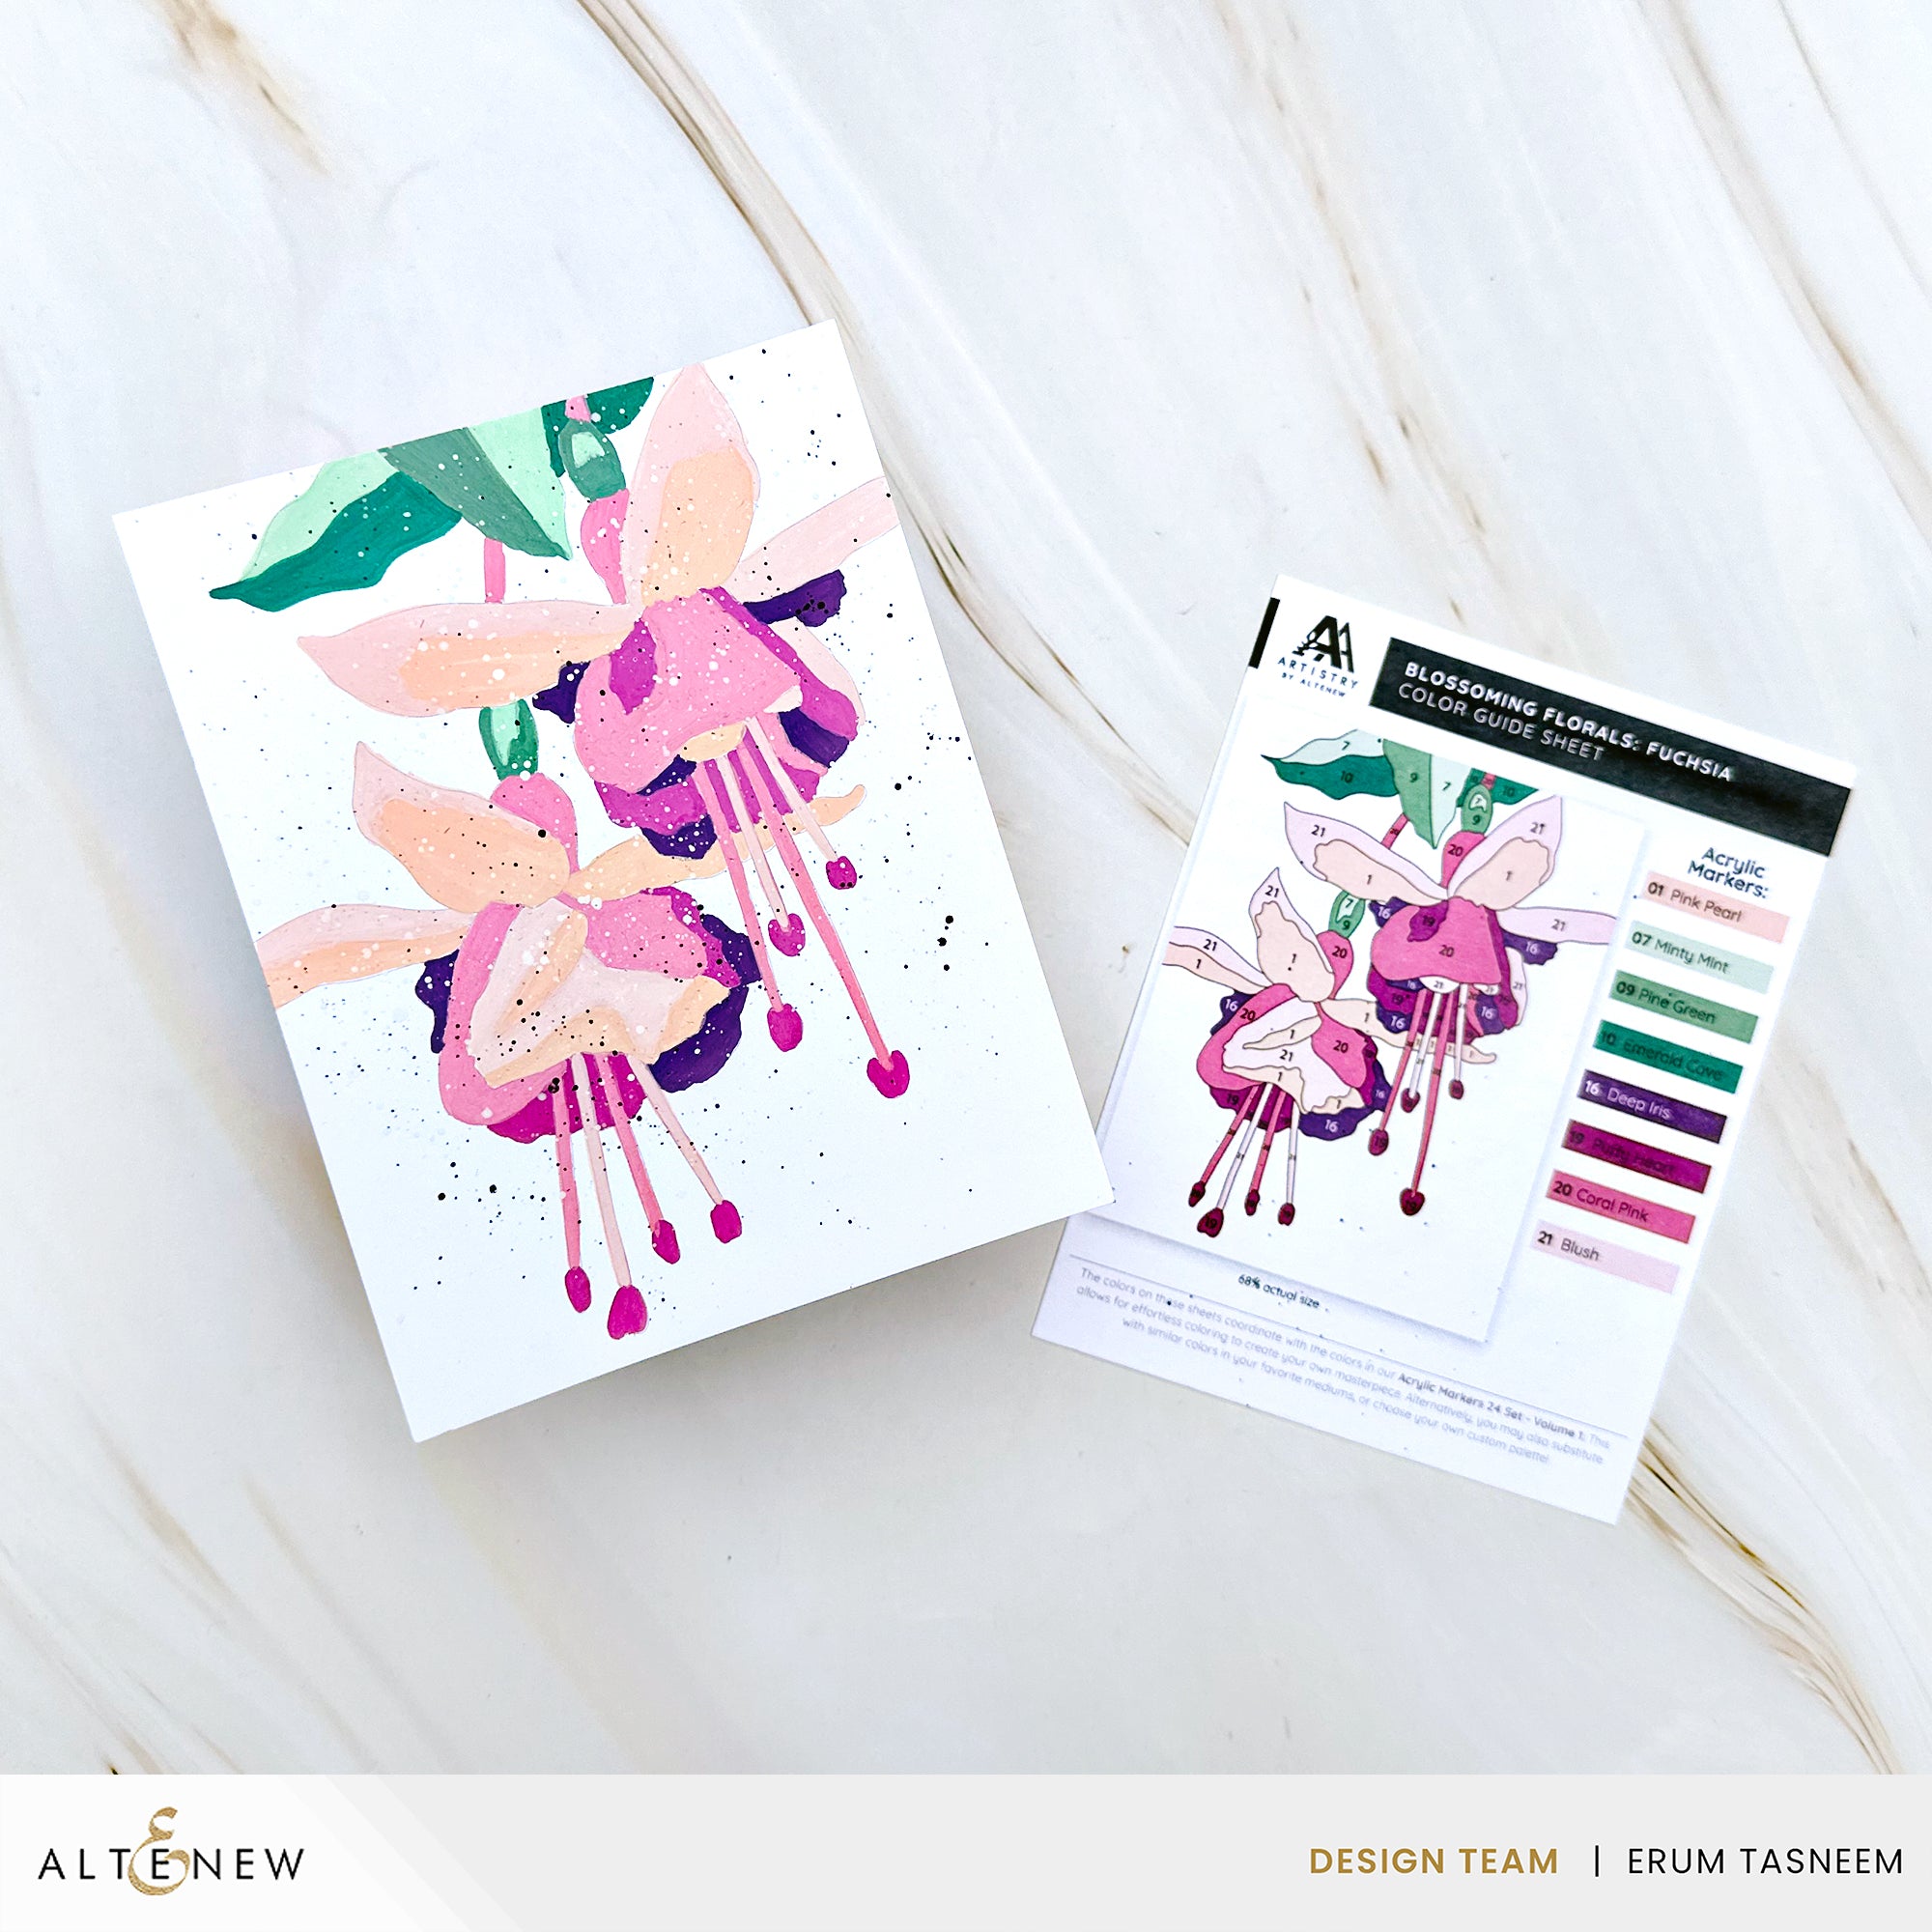 Altenew Exotic Blooms Marker Coloring Book ALT6578